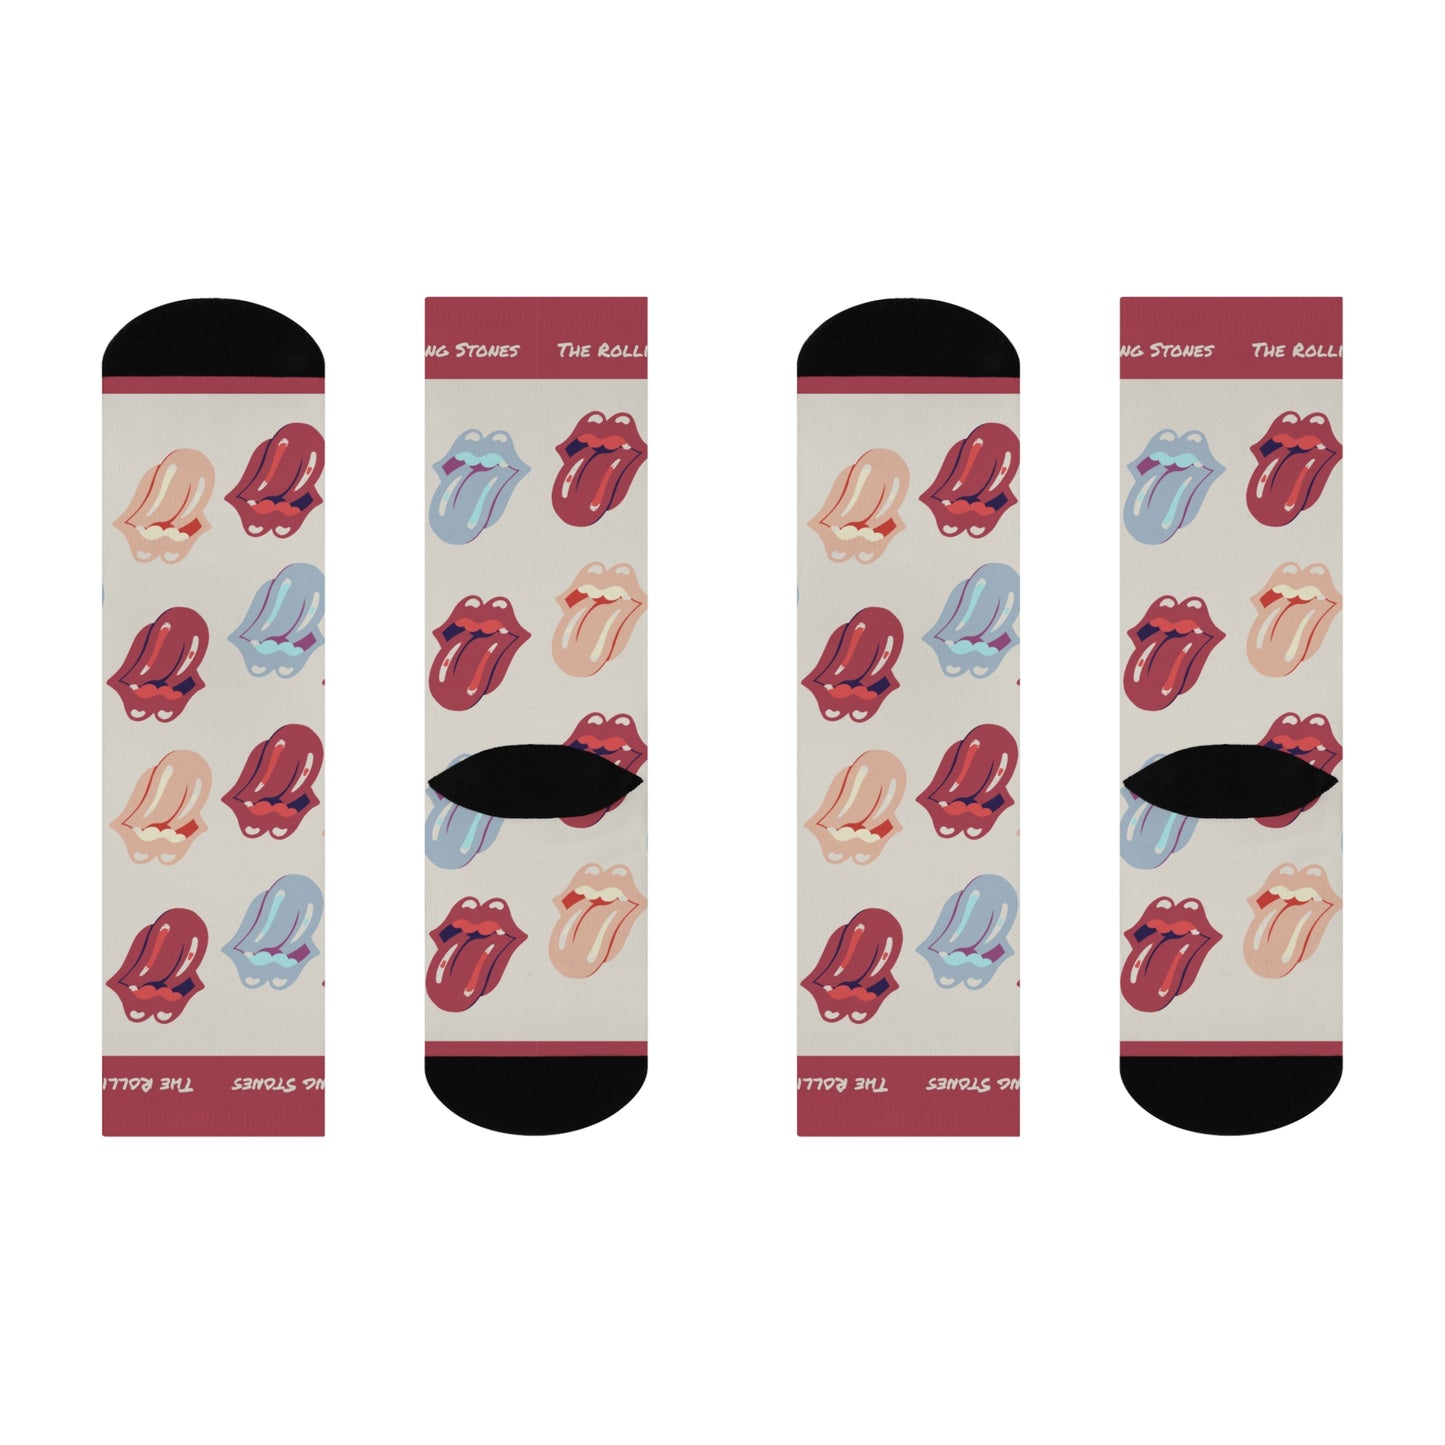 Rolling Stones Socks Some Girls Unisex Adult Stretchy Mid Calf Original